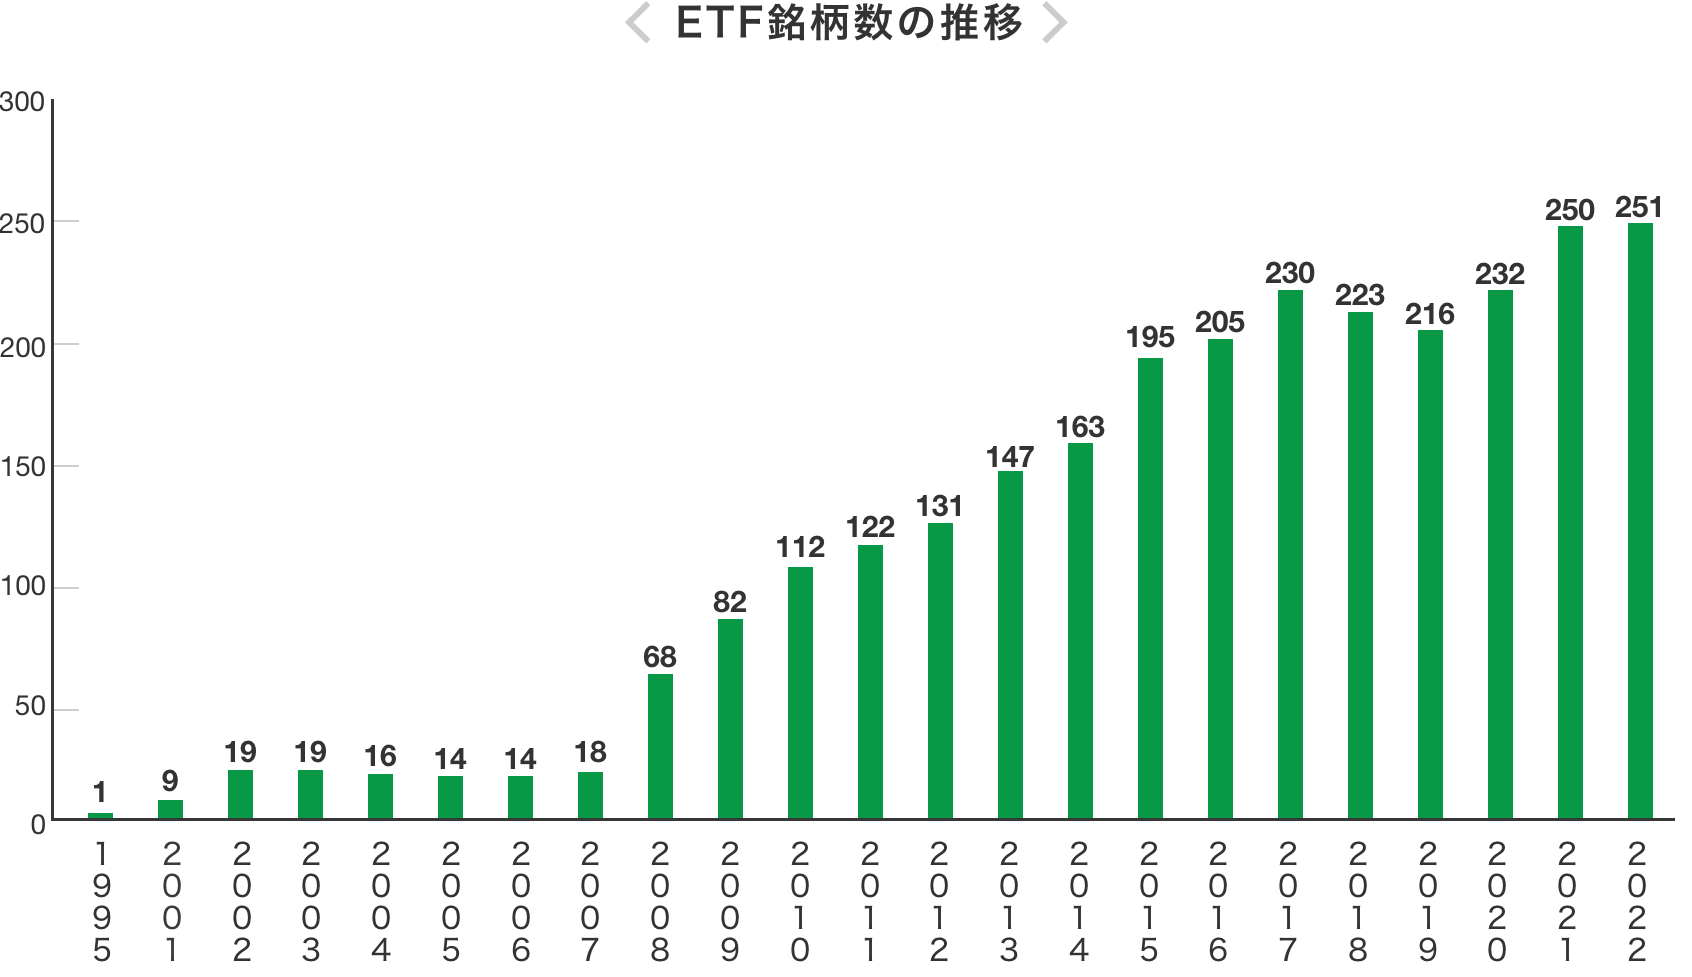 ETF銘柄数の推移のグラフ